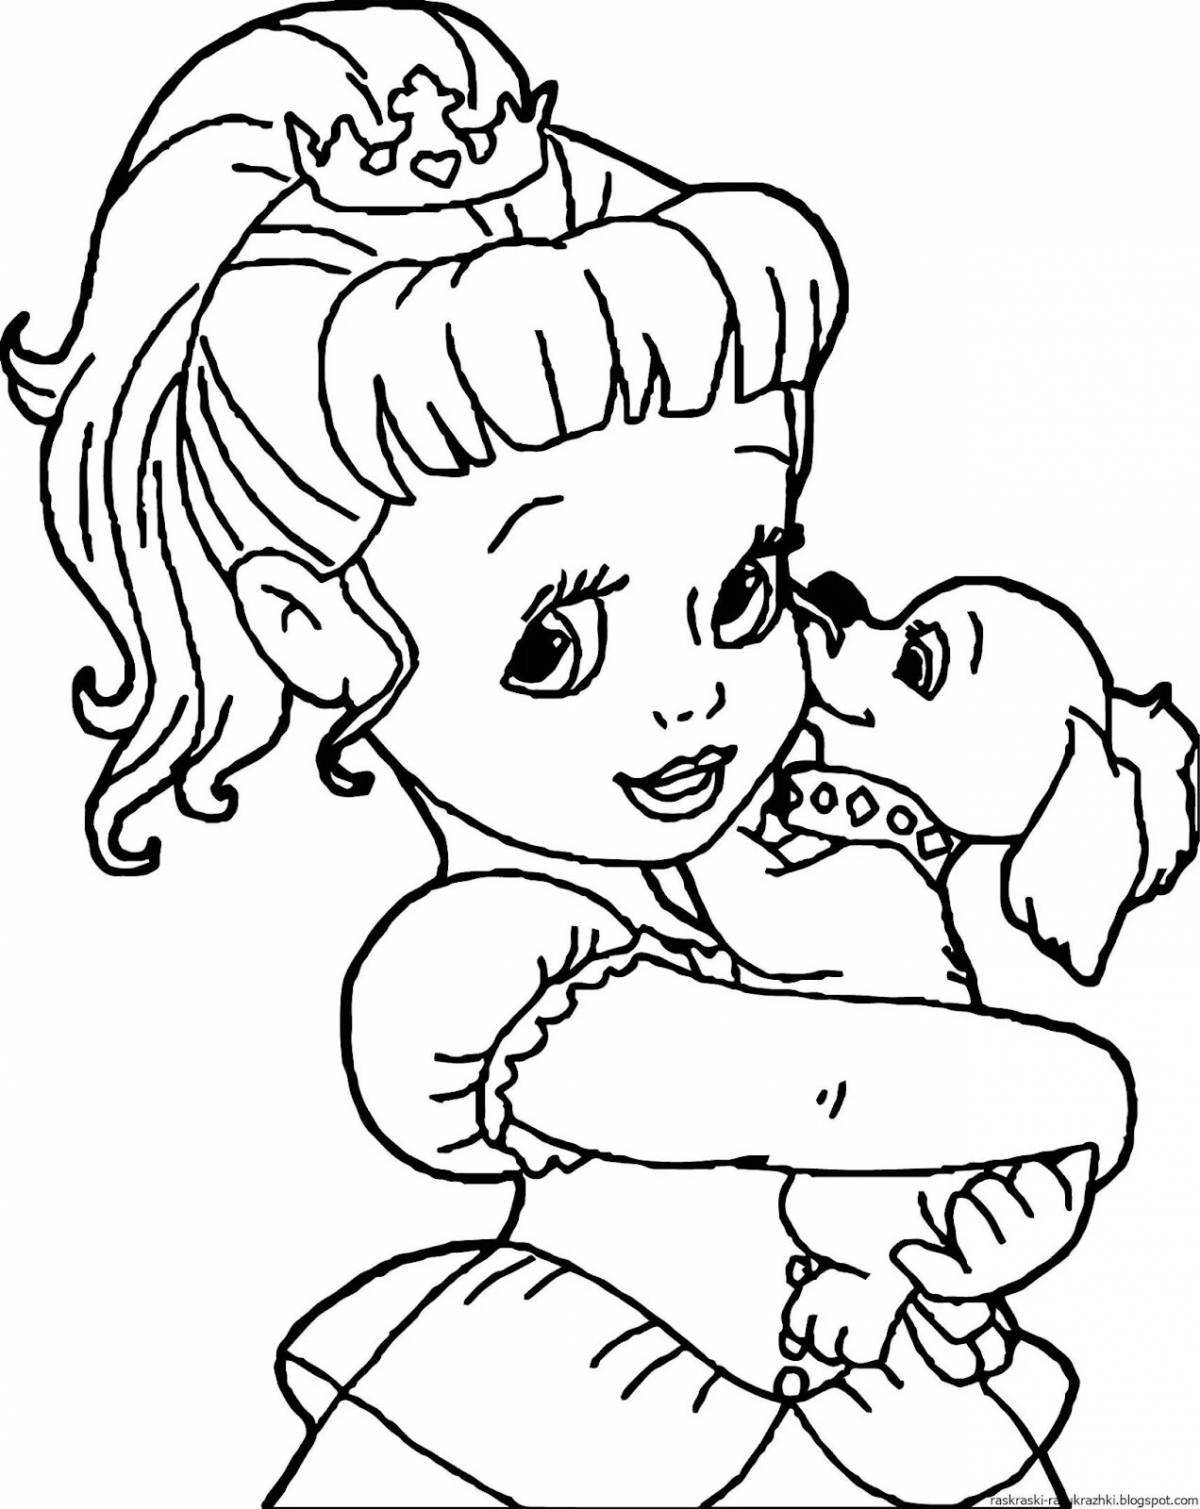 Adorable little princess coloring page